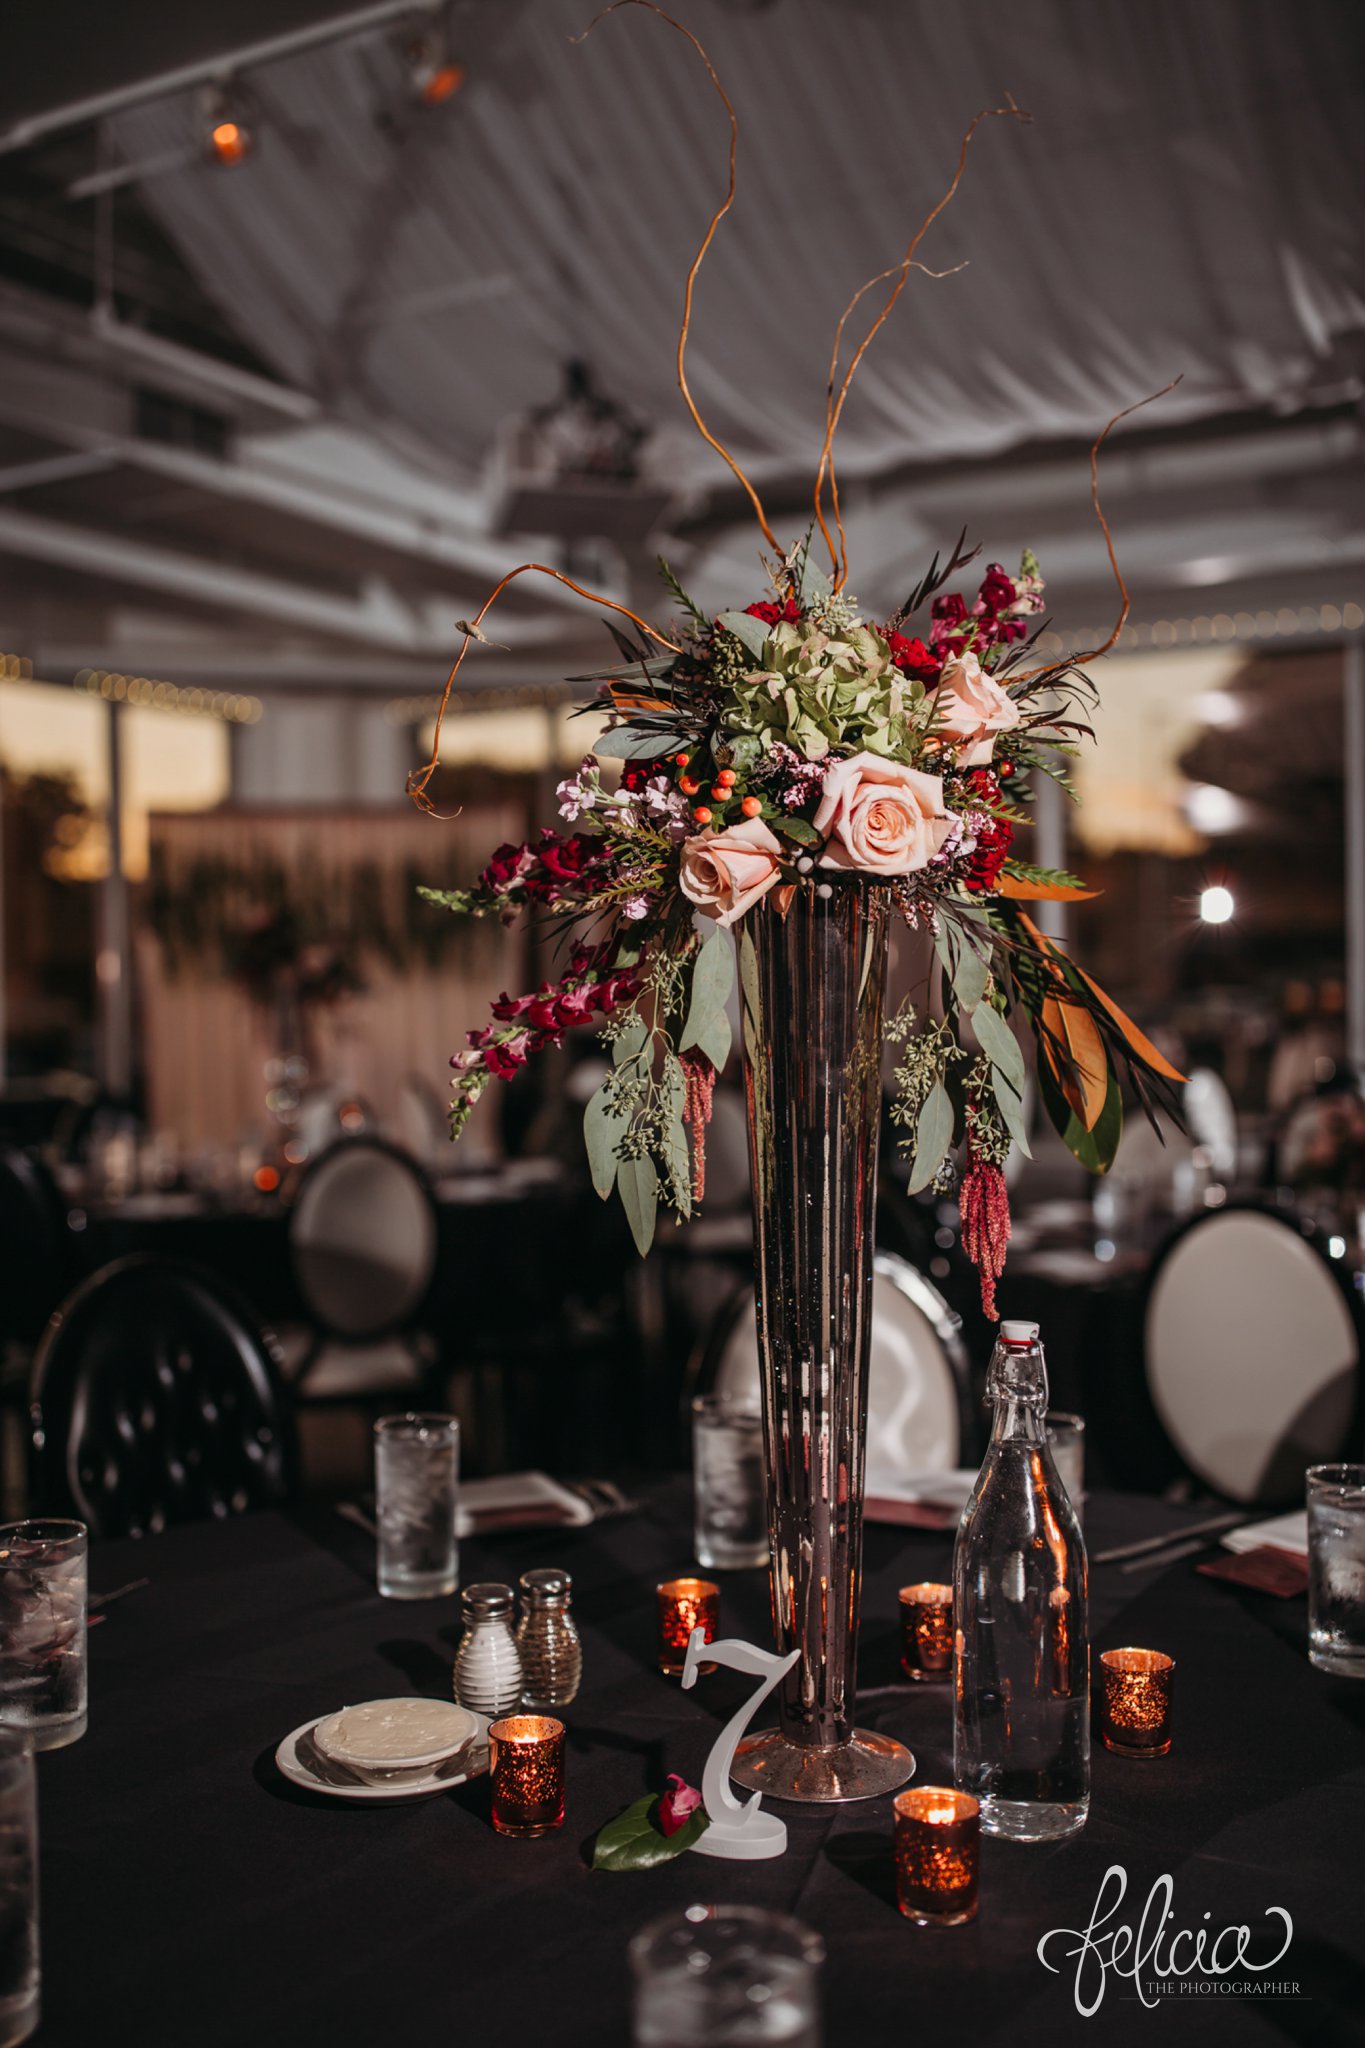 images by feliciathephotographer.com | wedding photographer | kansas city | centerpieces | rustic | floral | candles | details | reception | autumn | classic | 